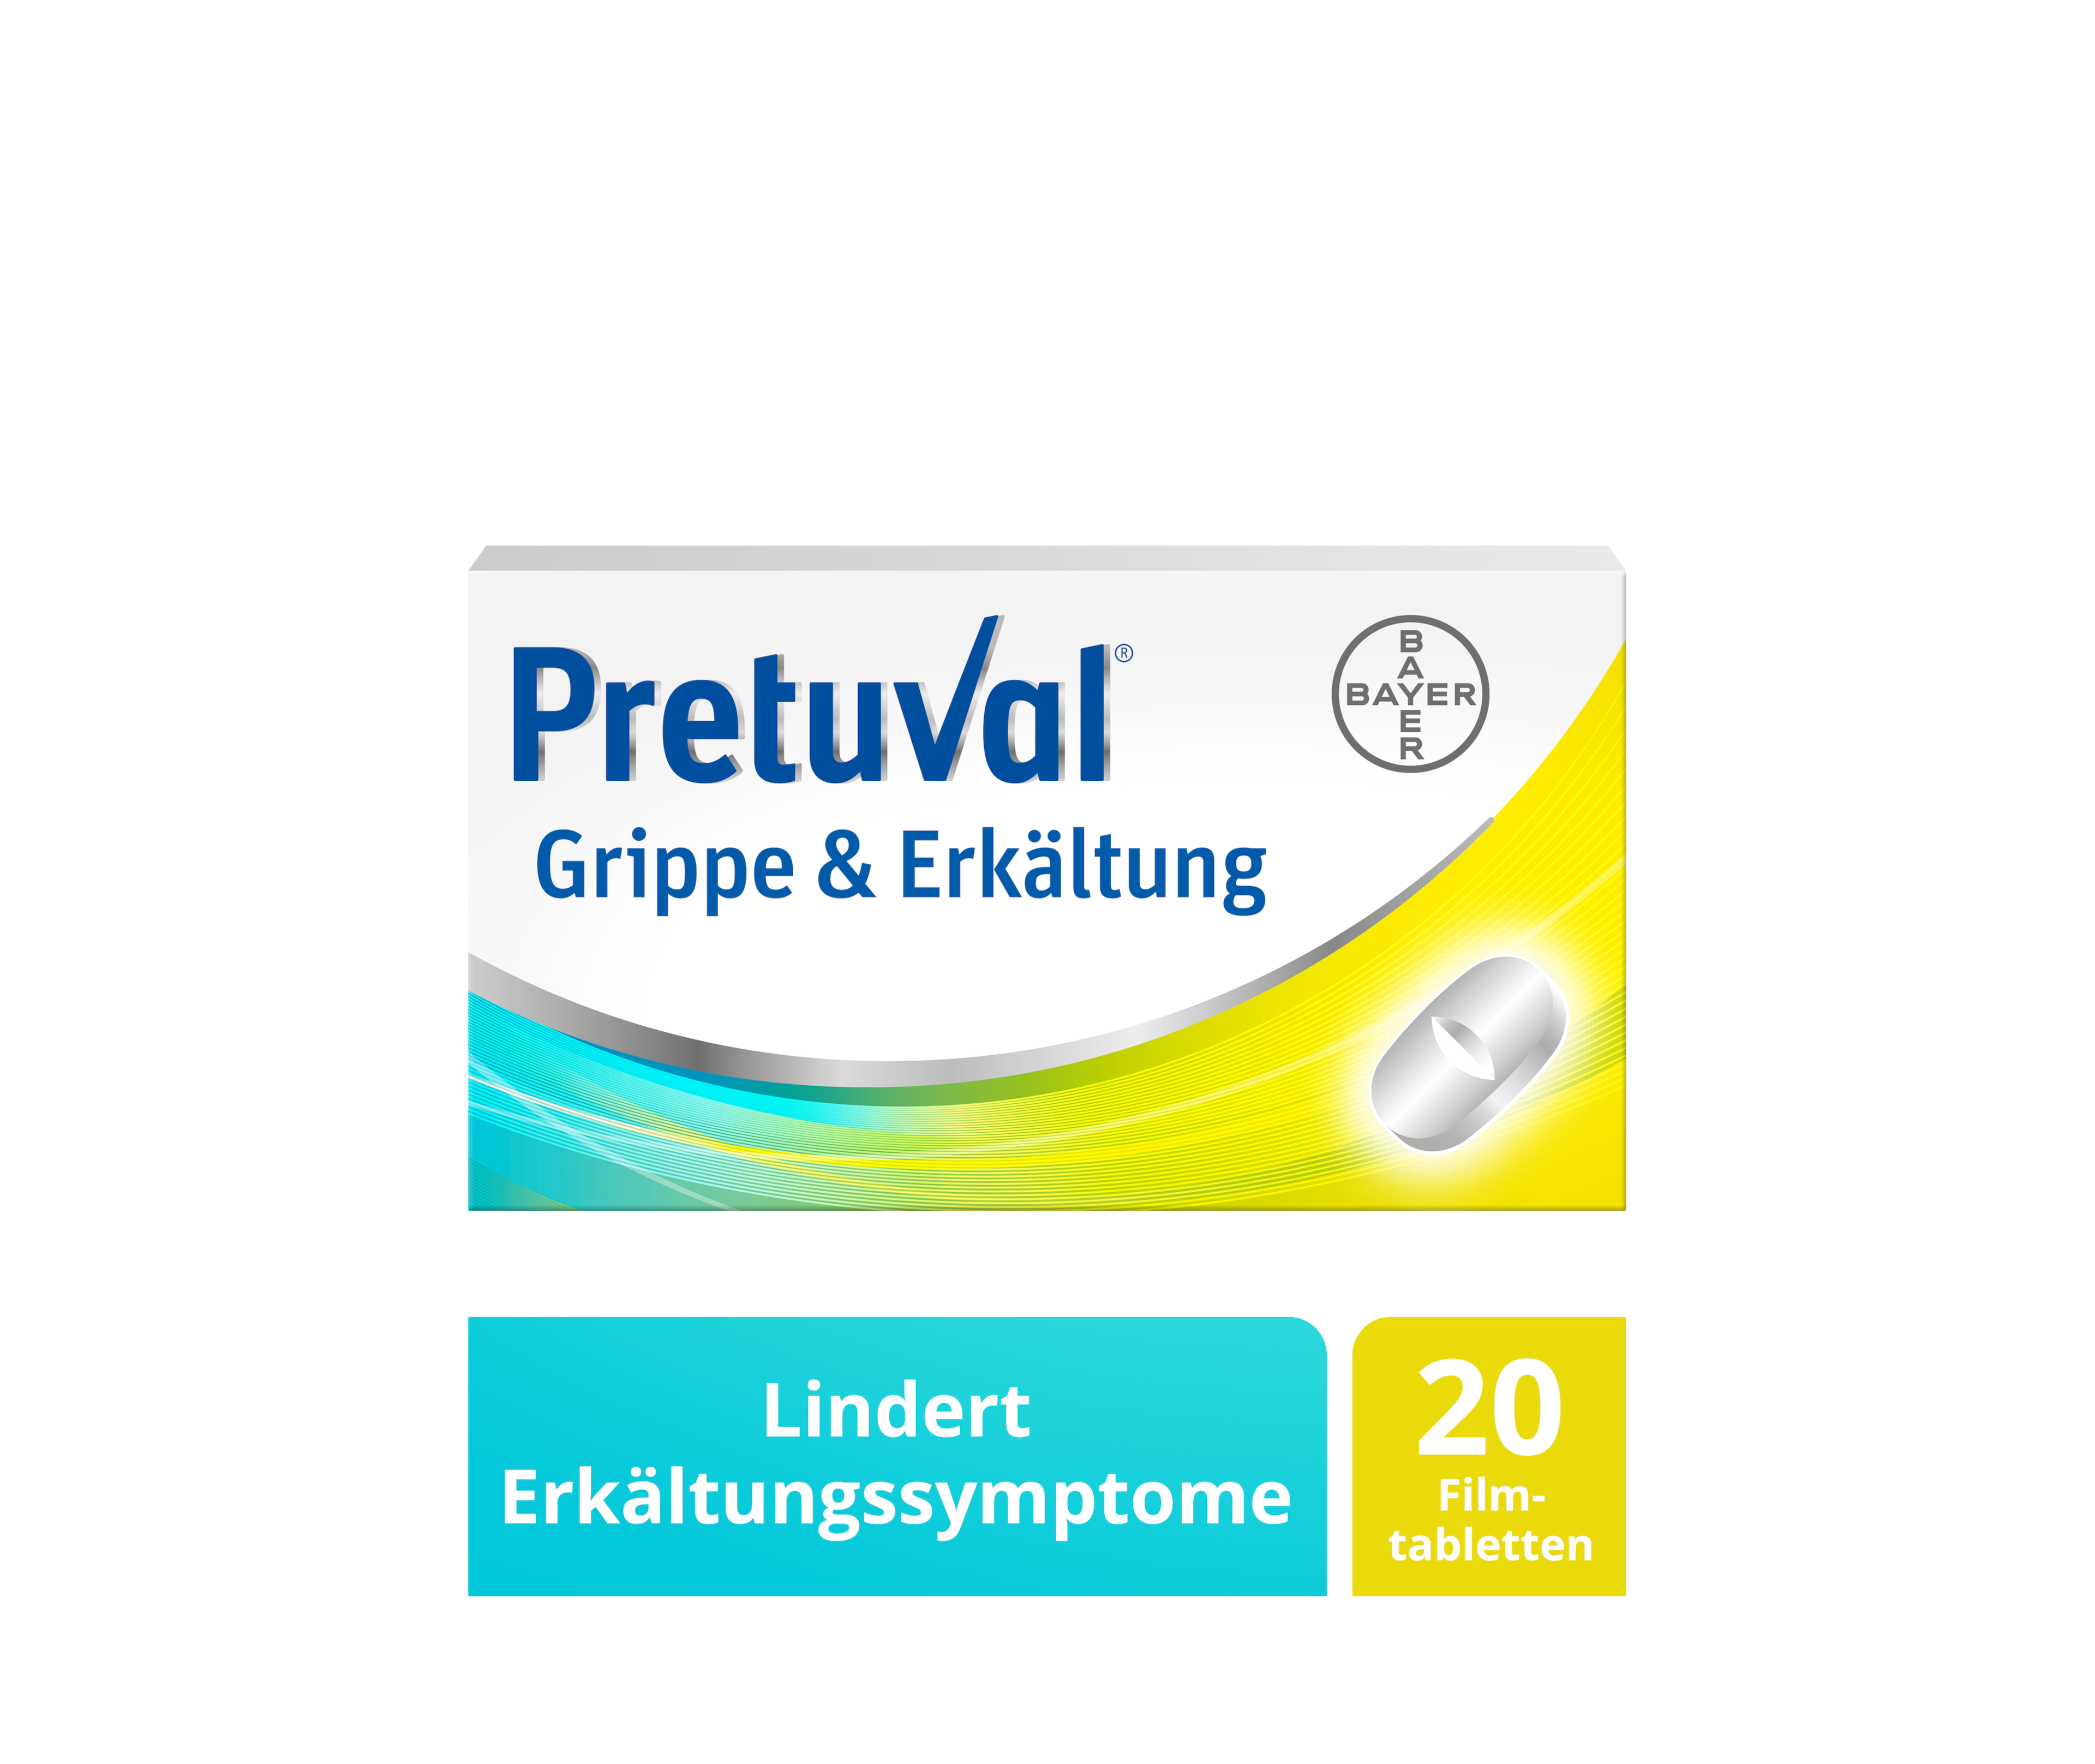 Pretuval® Grippe & Erkältung-20 Filmtabletten Packshot